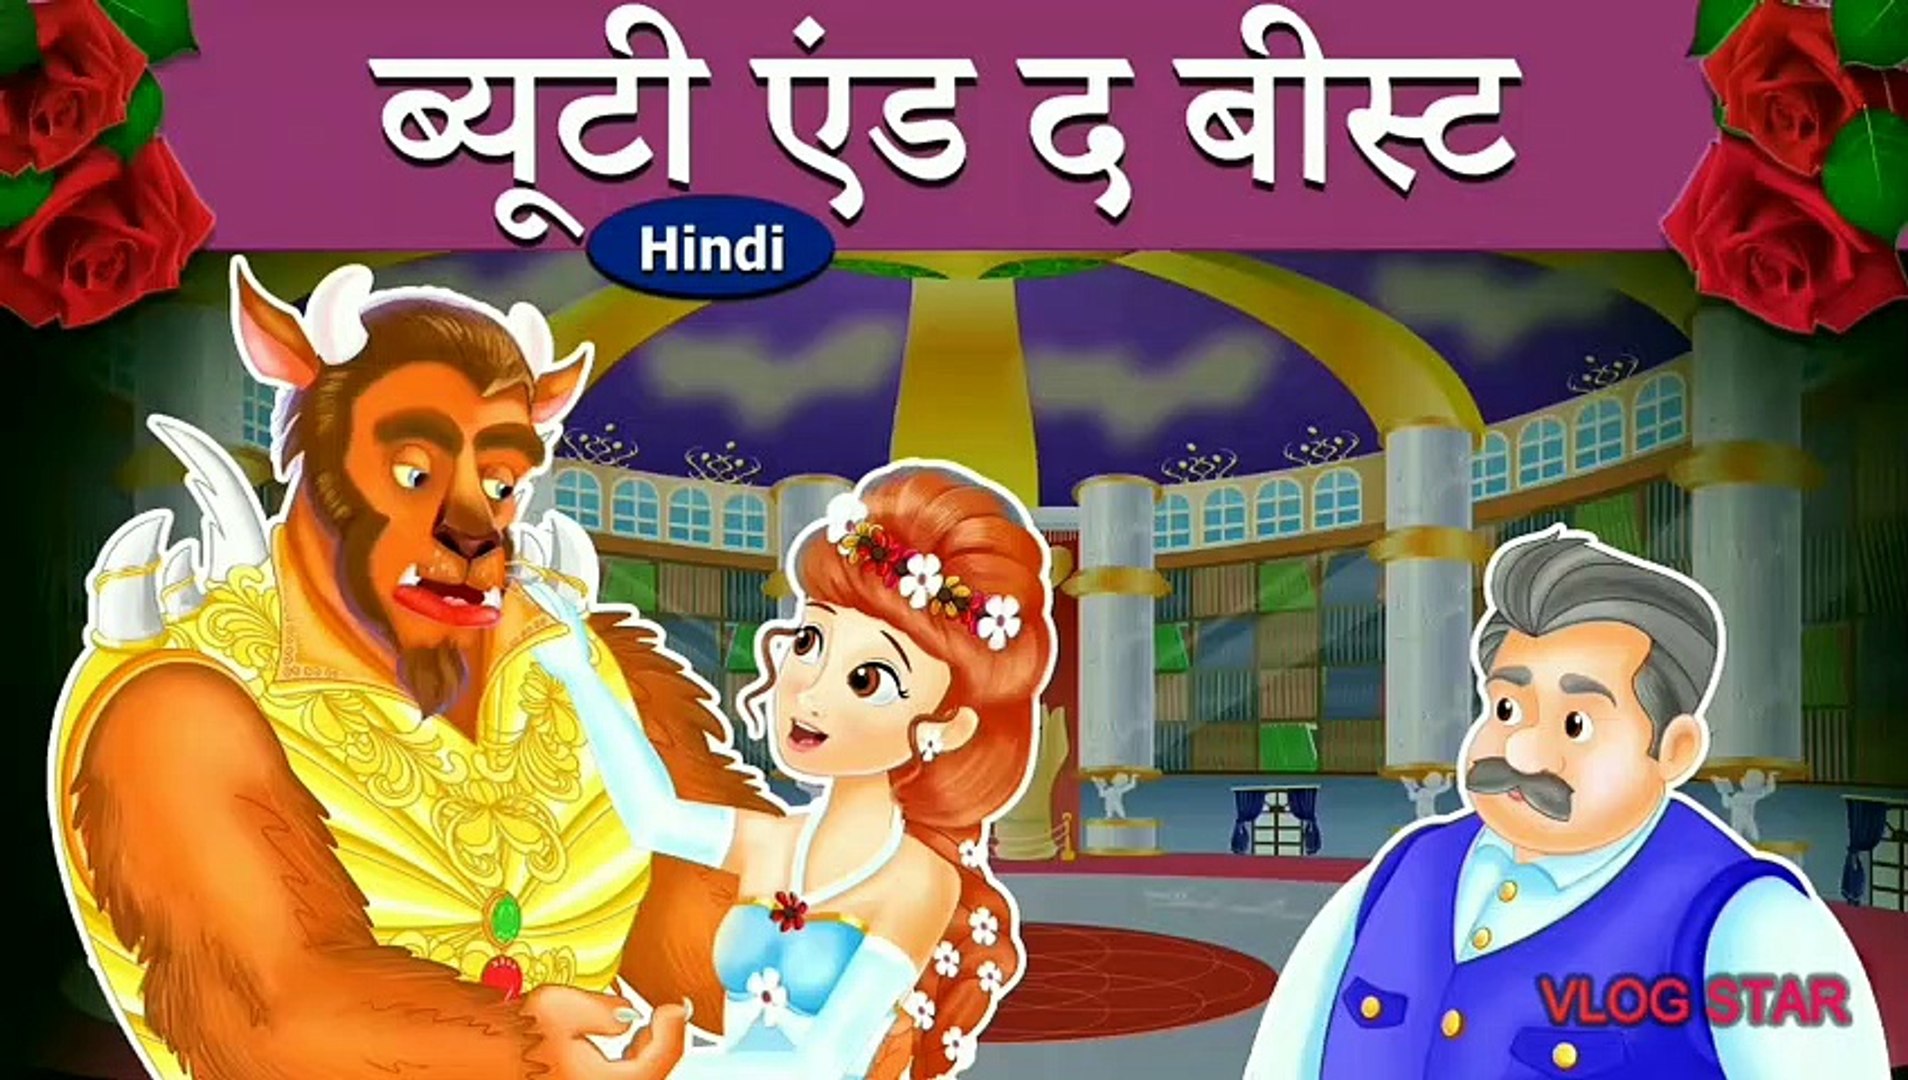 ब्यूटी एंड द बीस्ट | Beauty and the Beast full story in Hindi | Kahani |  Hindi Kahani 4 Kids - video Dailymotion